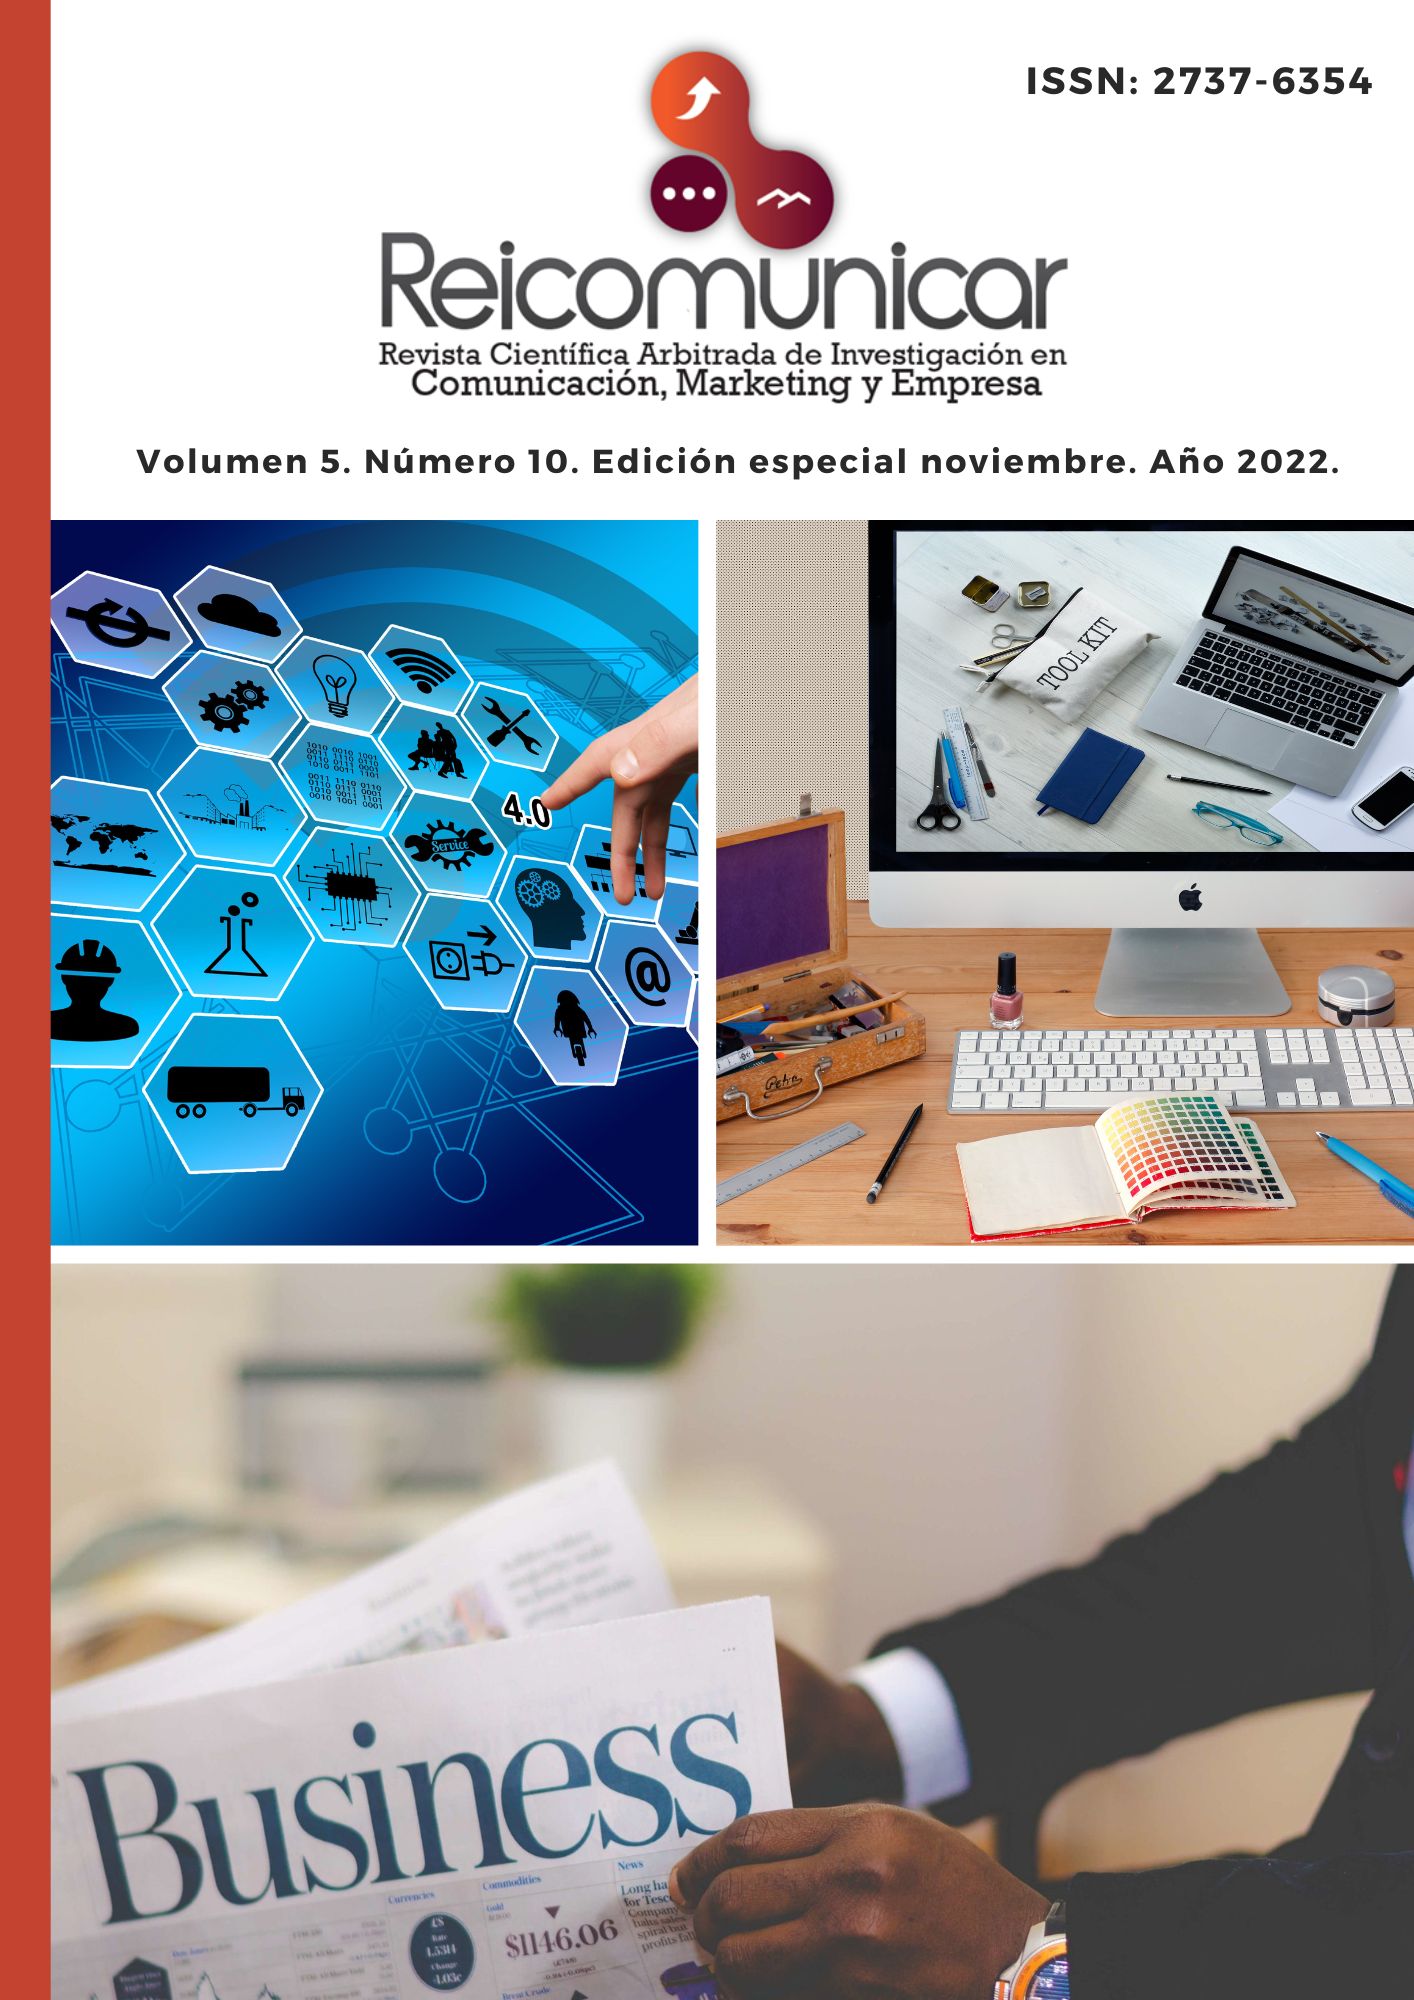 					Ver Vol. 5 Núm. 10 Ed. esp. (2022): Revista Científica Arbitrada de Investigación en Comunicación, Marketing y Empresa REICOMUNICAR. (Edición especial noviembre 2022)
				